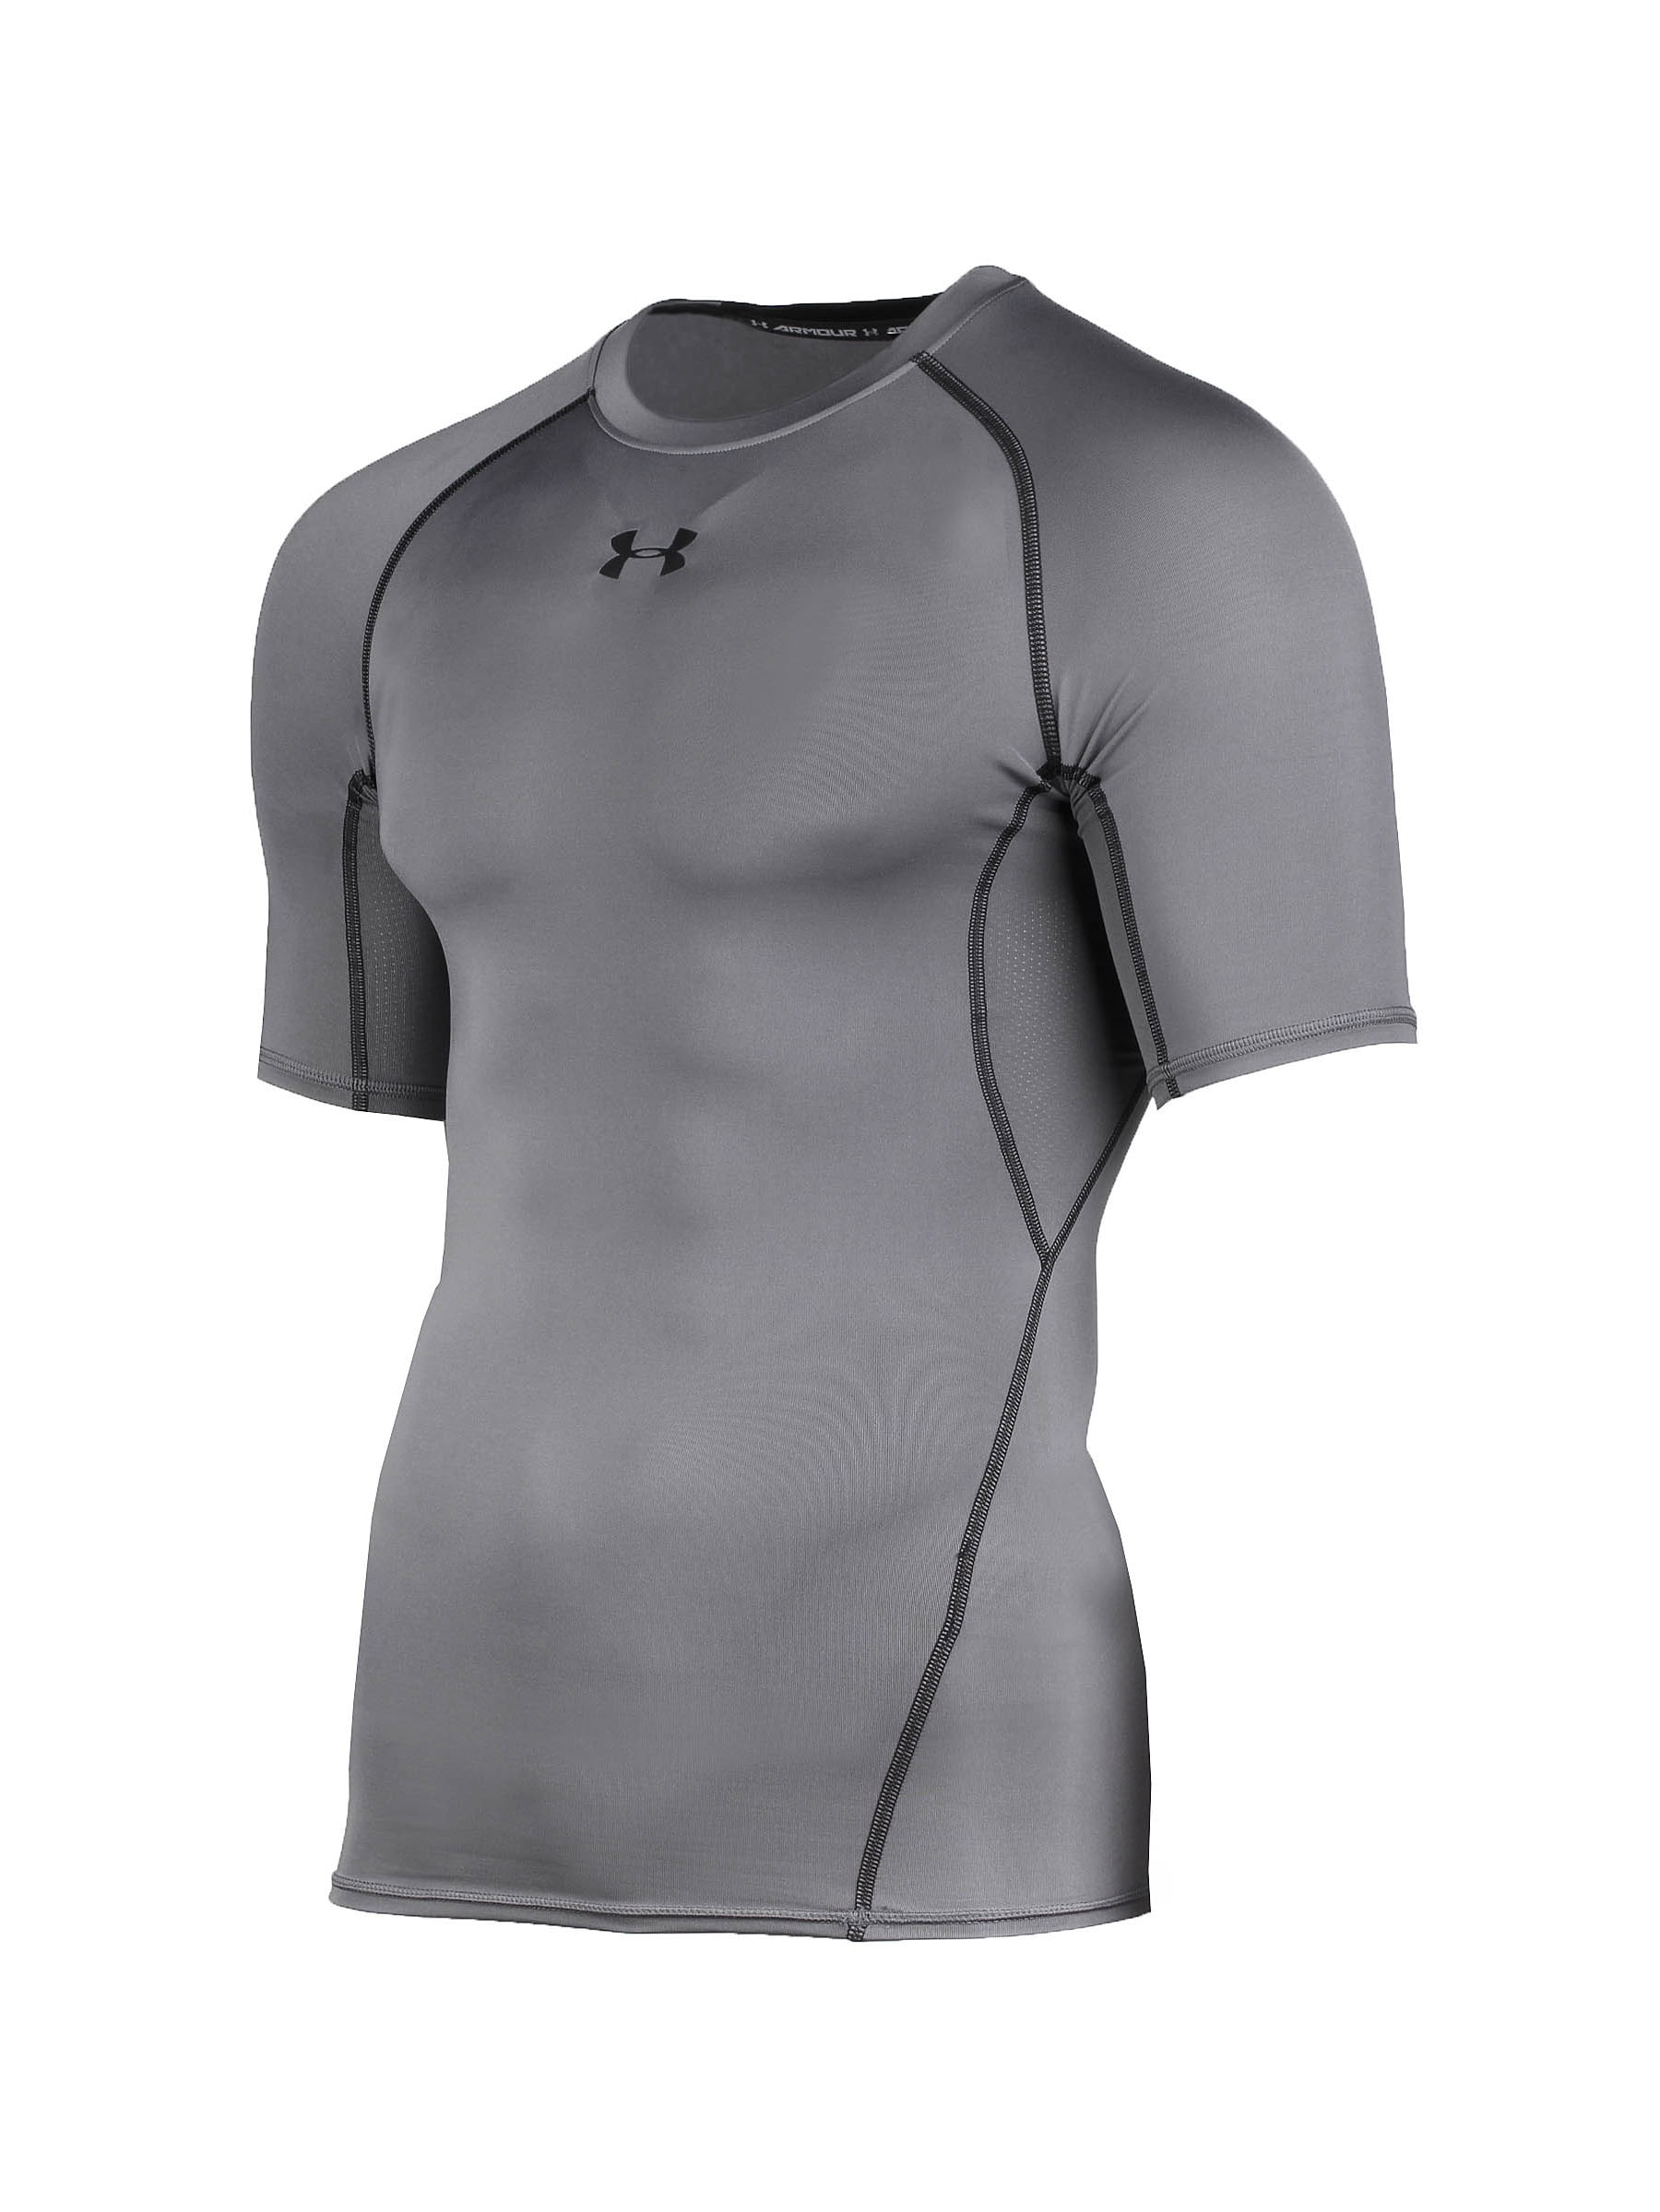 Under Armour 1257468 Men's Black HeatGear S/S Compression Shirt